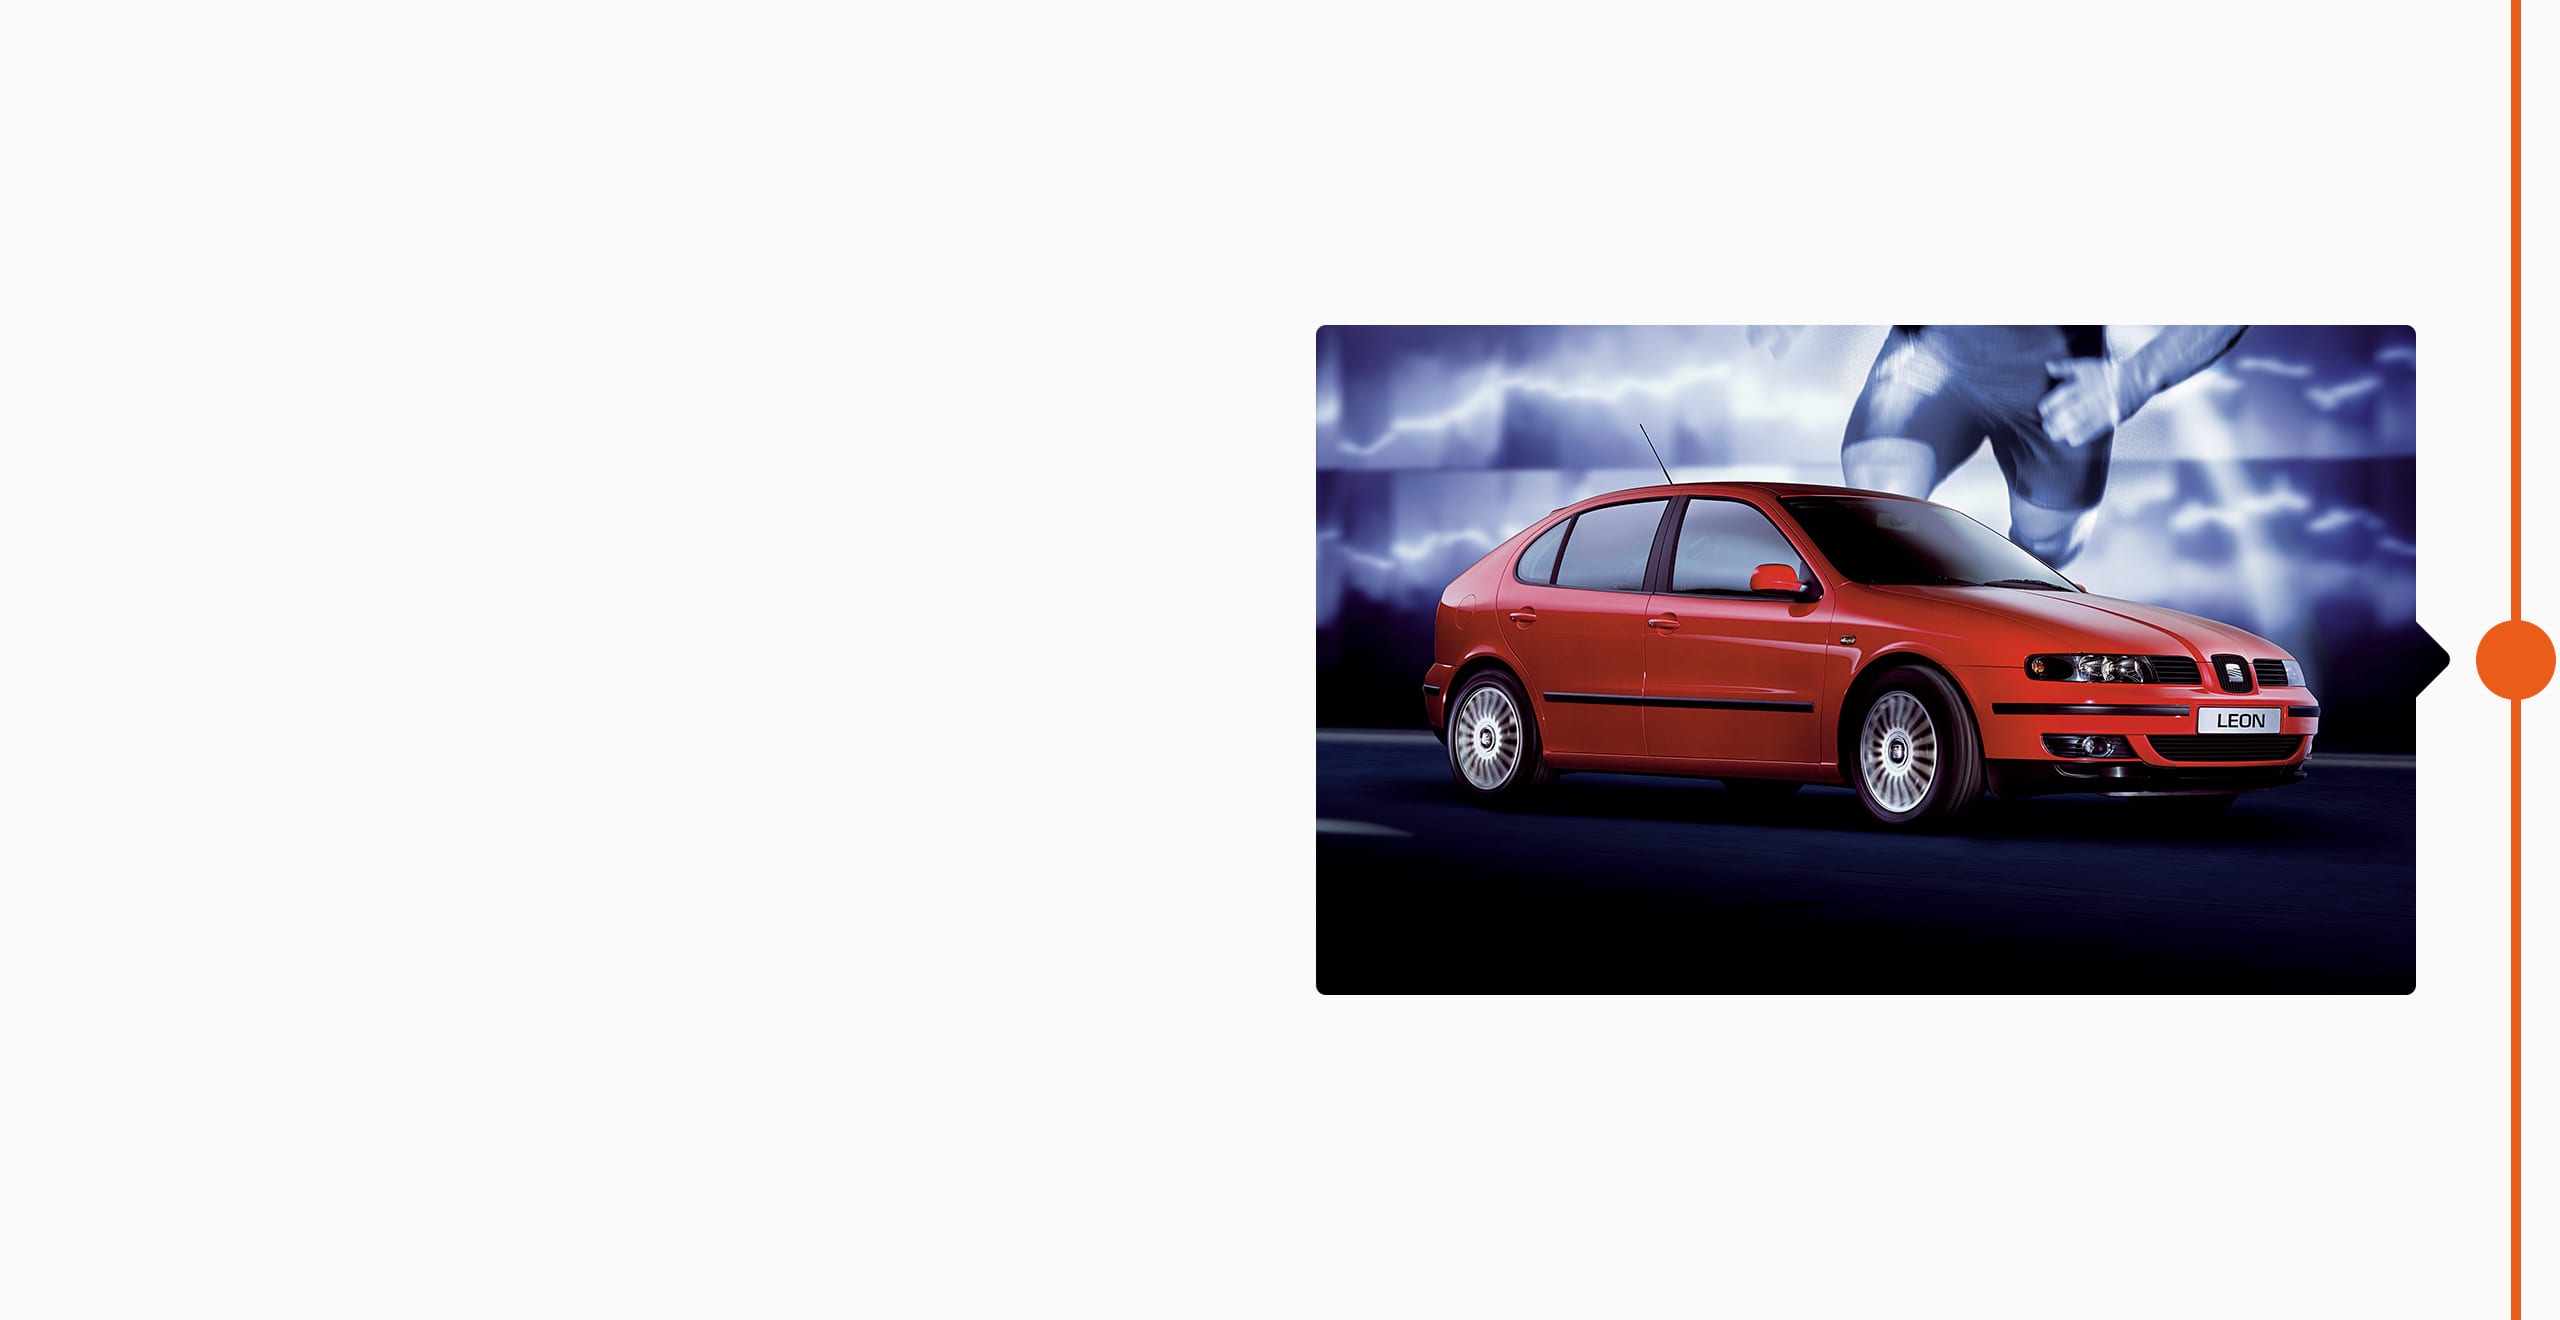 Histoire de la marque SEAT 1999 - SEAT Leon original